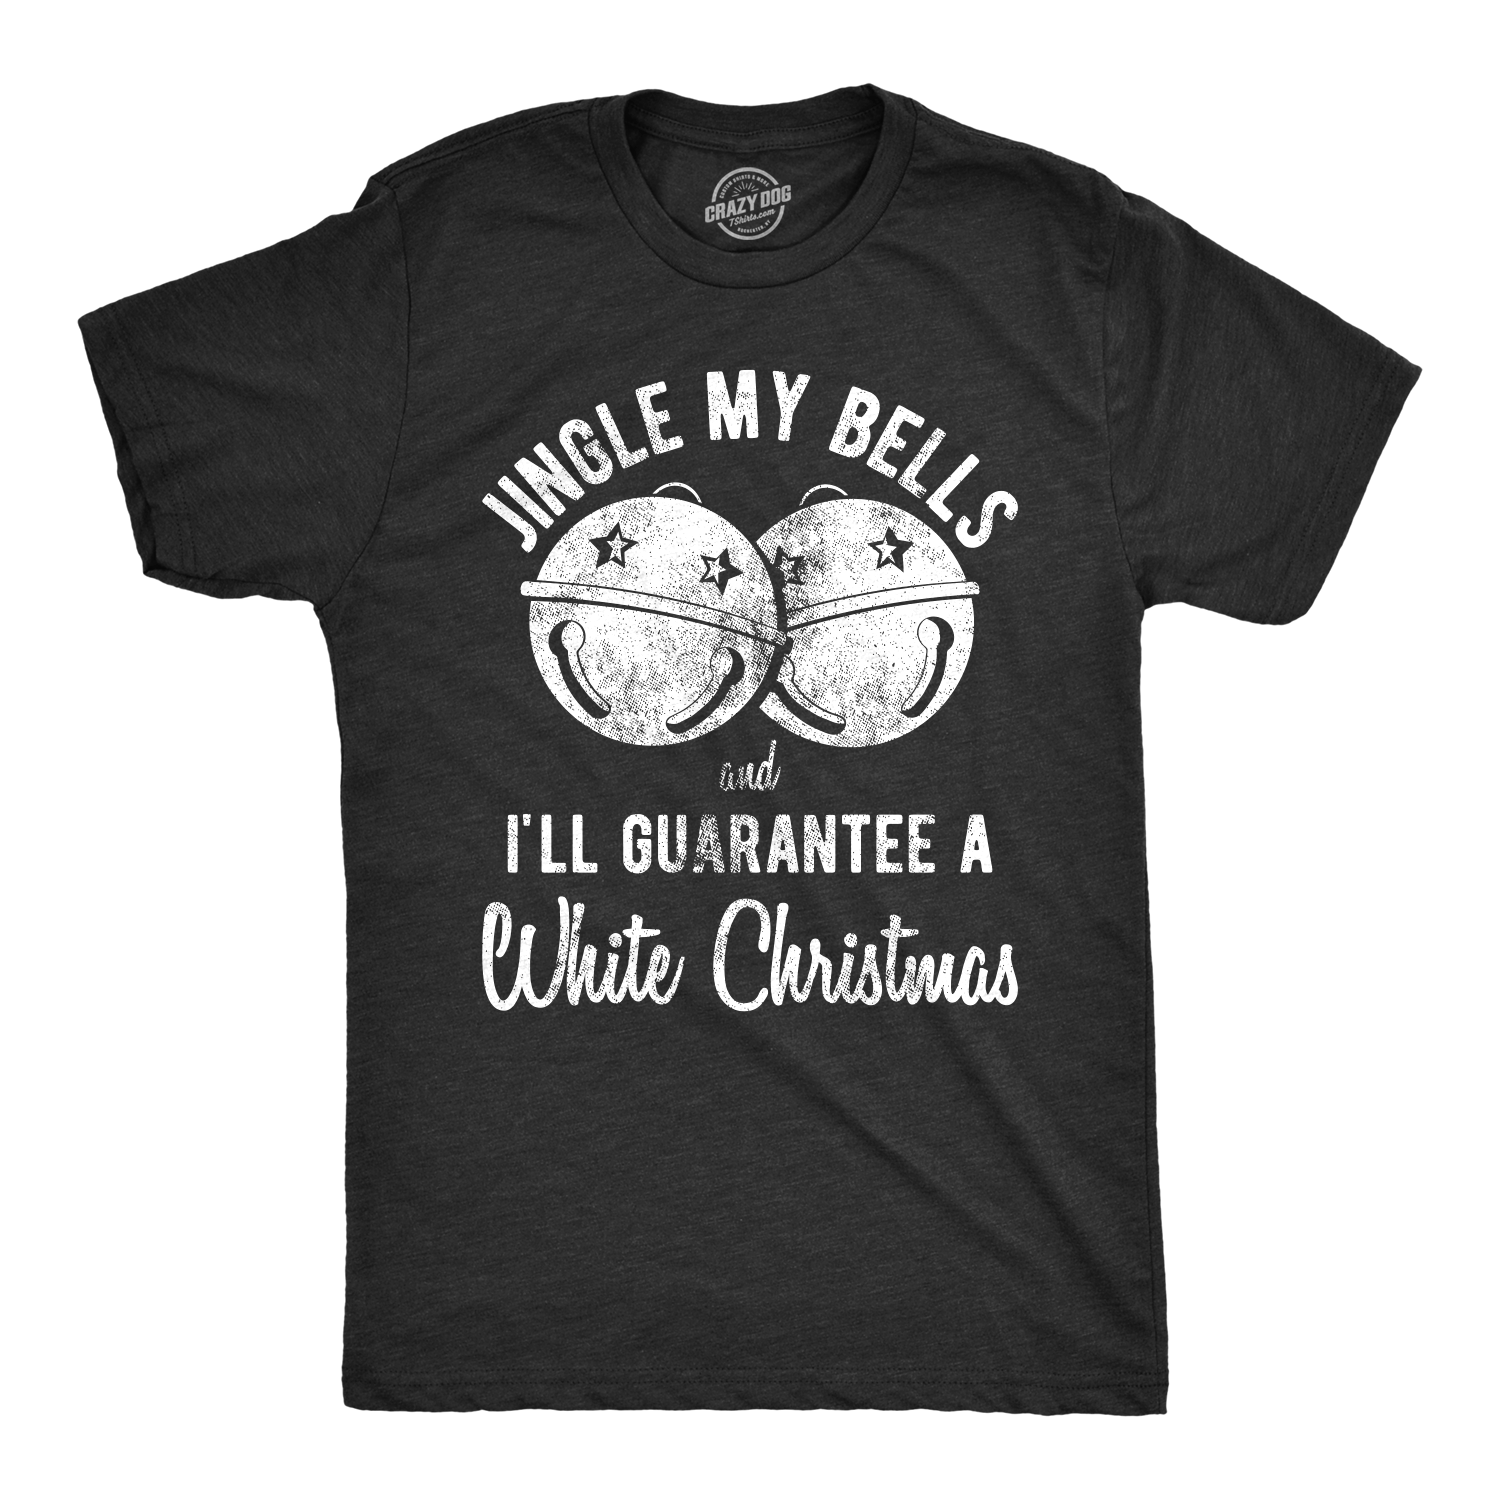 Jingle My Bells Men's Tshirt - Crazy Dog T-Shirts